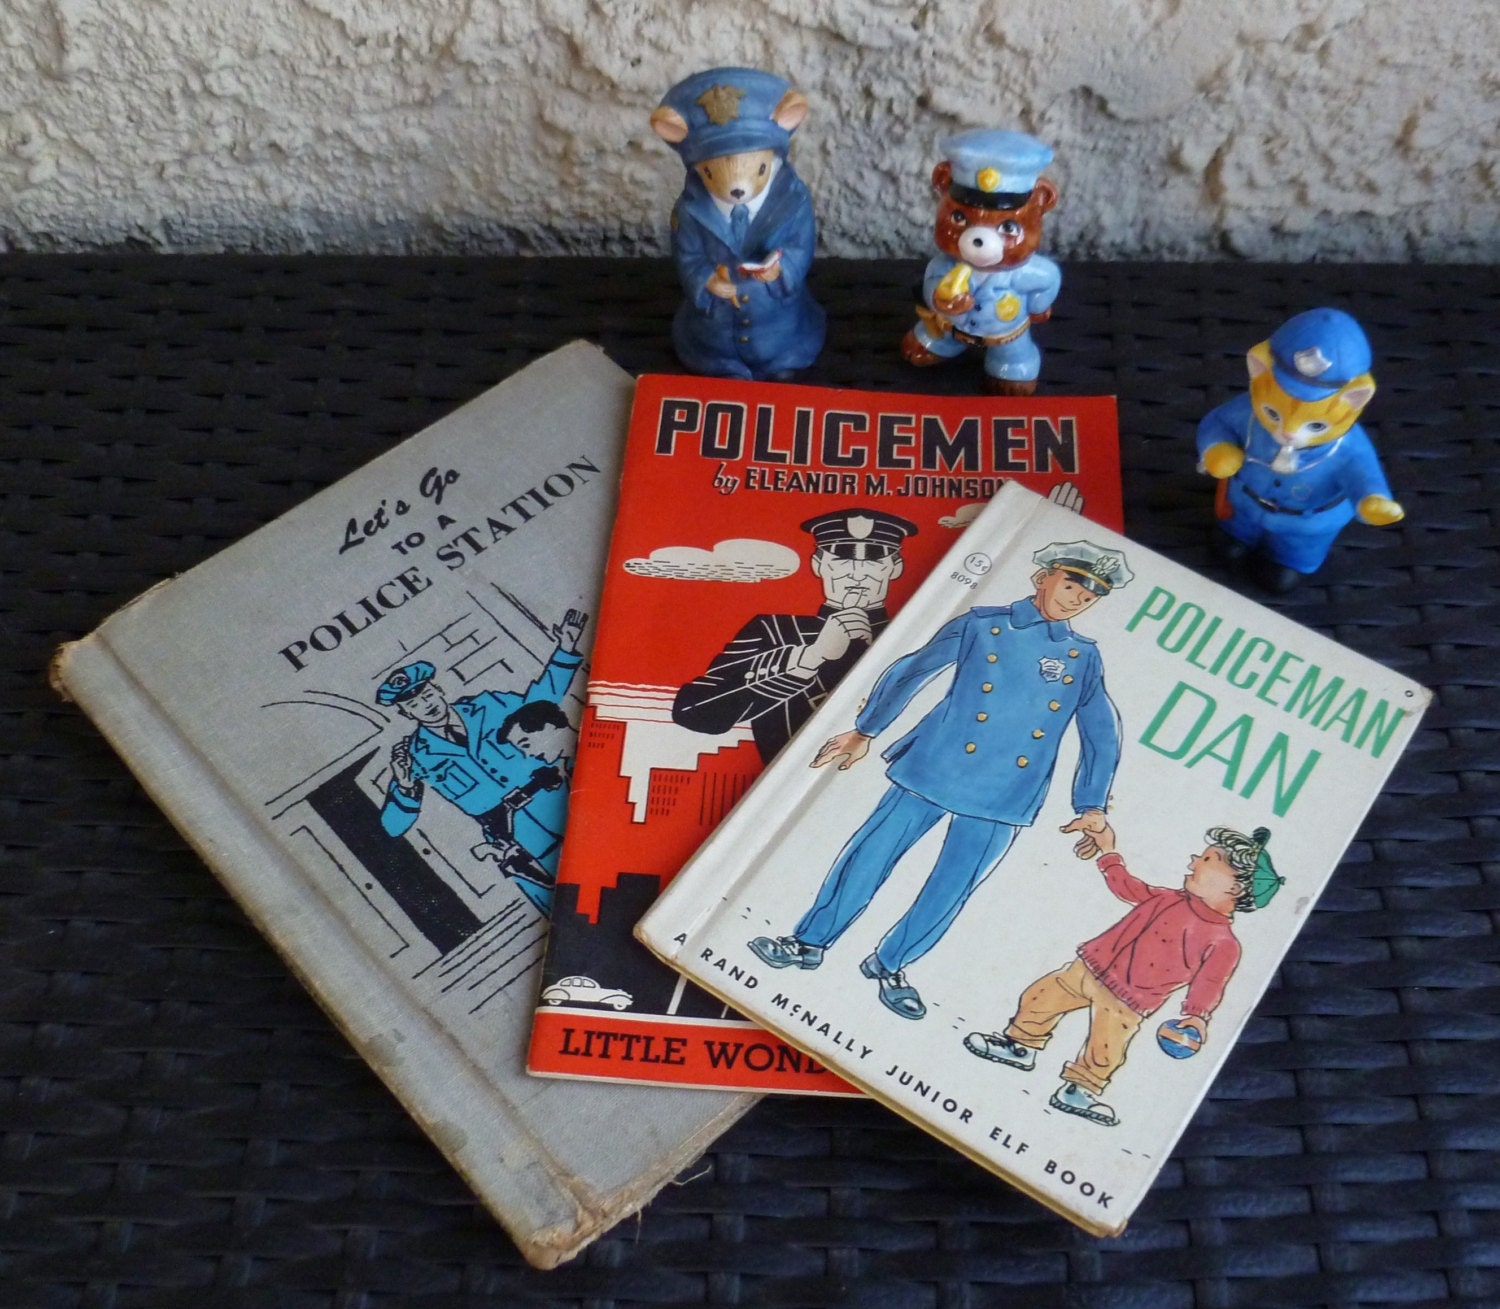 Police Officer Books Amp Figurines Childrens Books Vintage